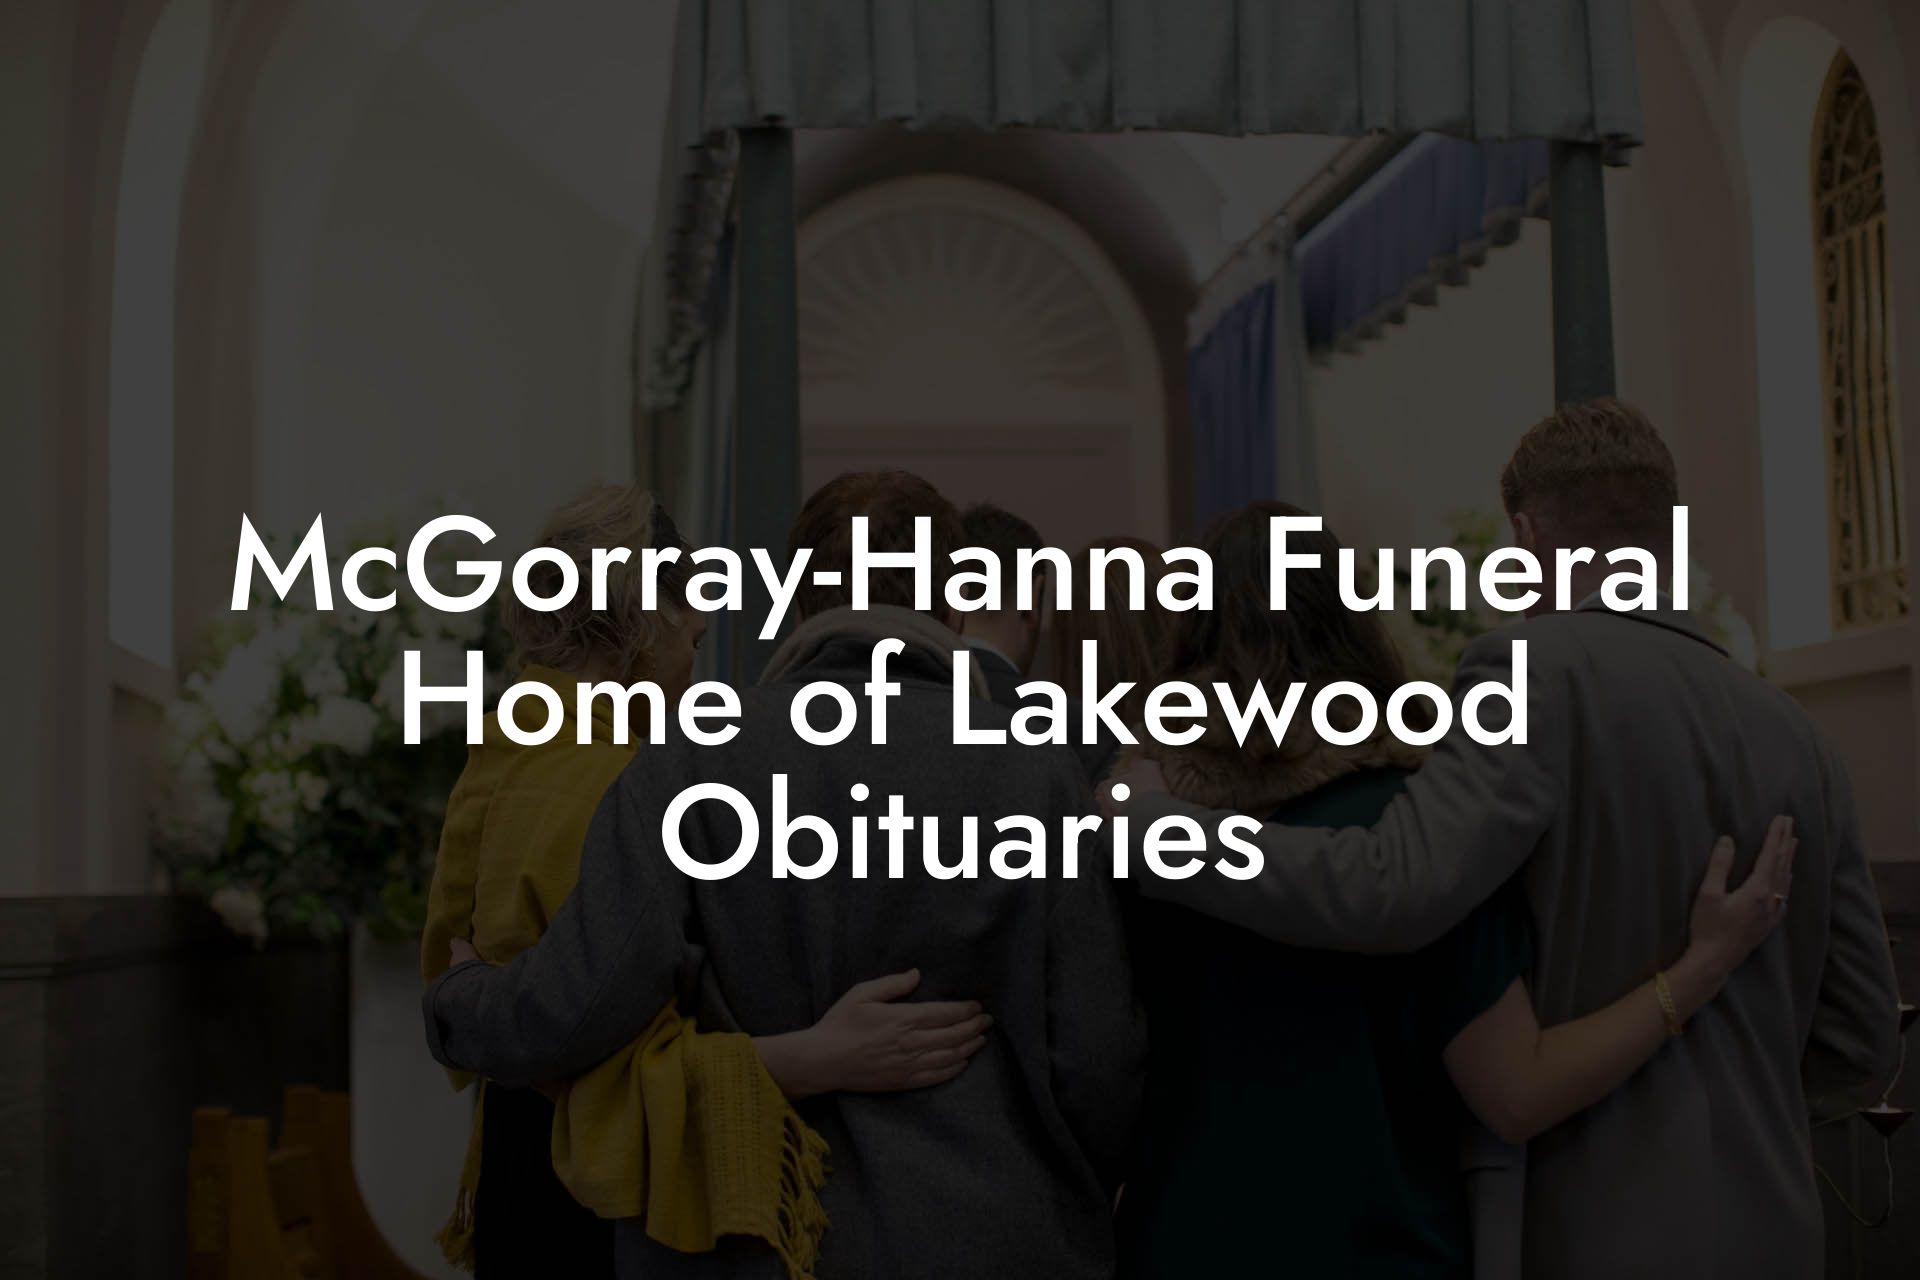 McGorray-Hanna Funeral Home of Lakewood Obituaries